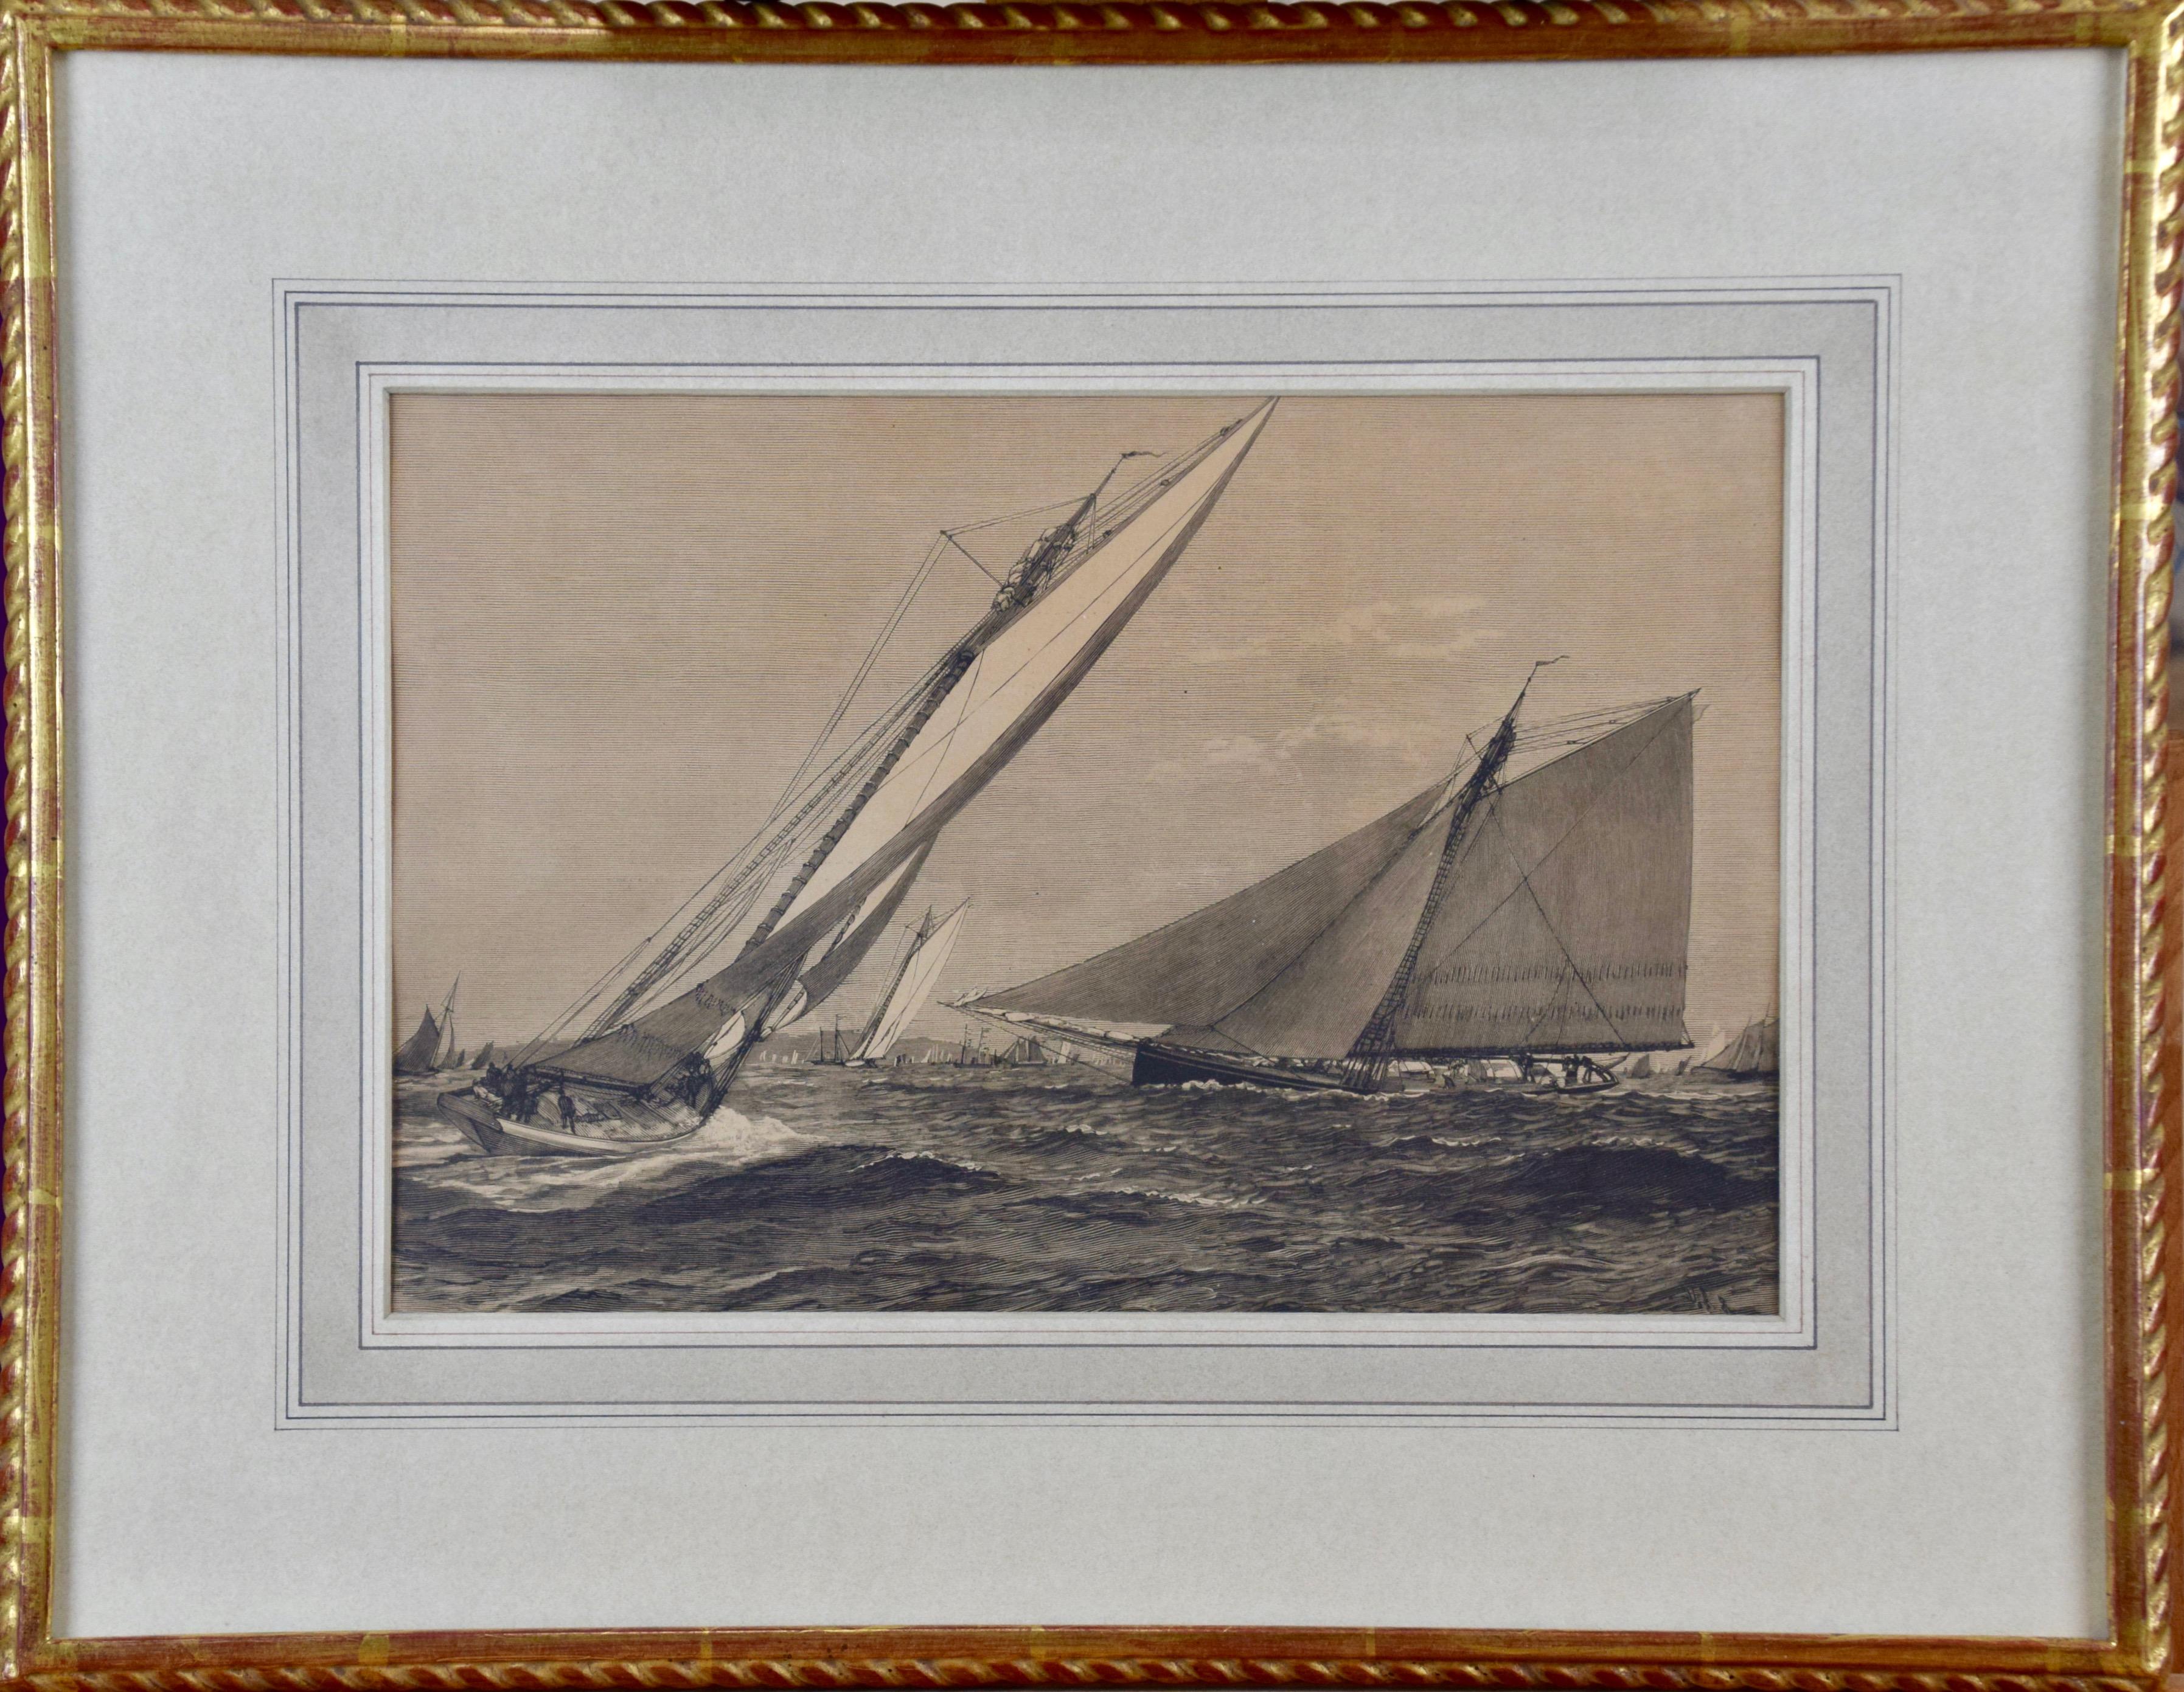 1885 America's Cup Sailing Yachts: Set of 3 Original 19th C. Engravings 7